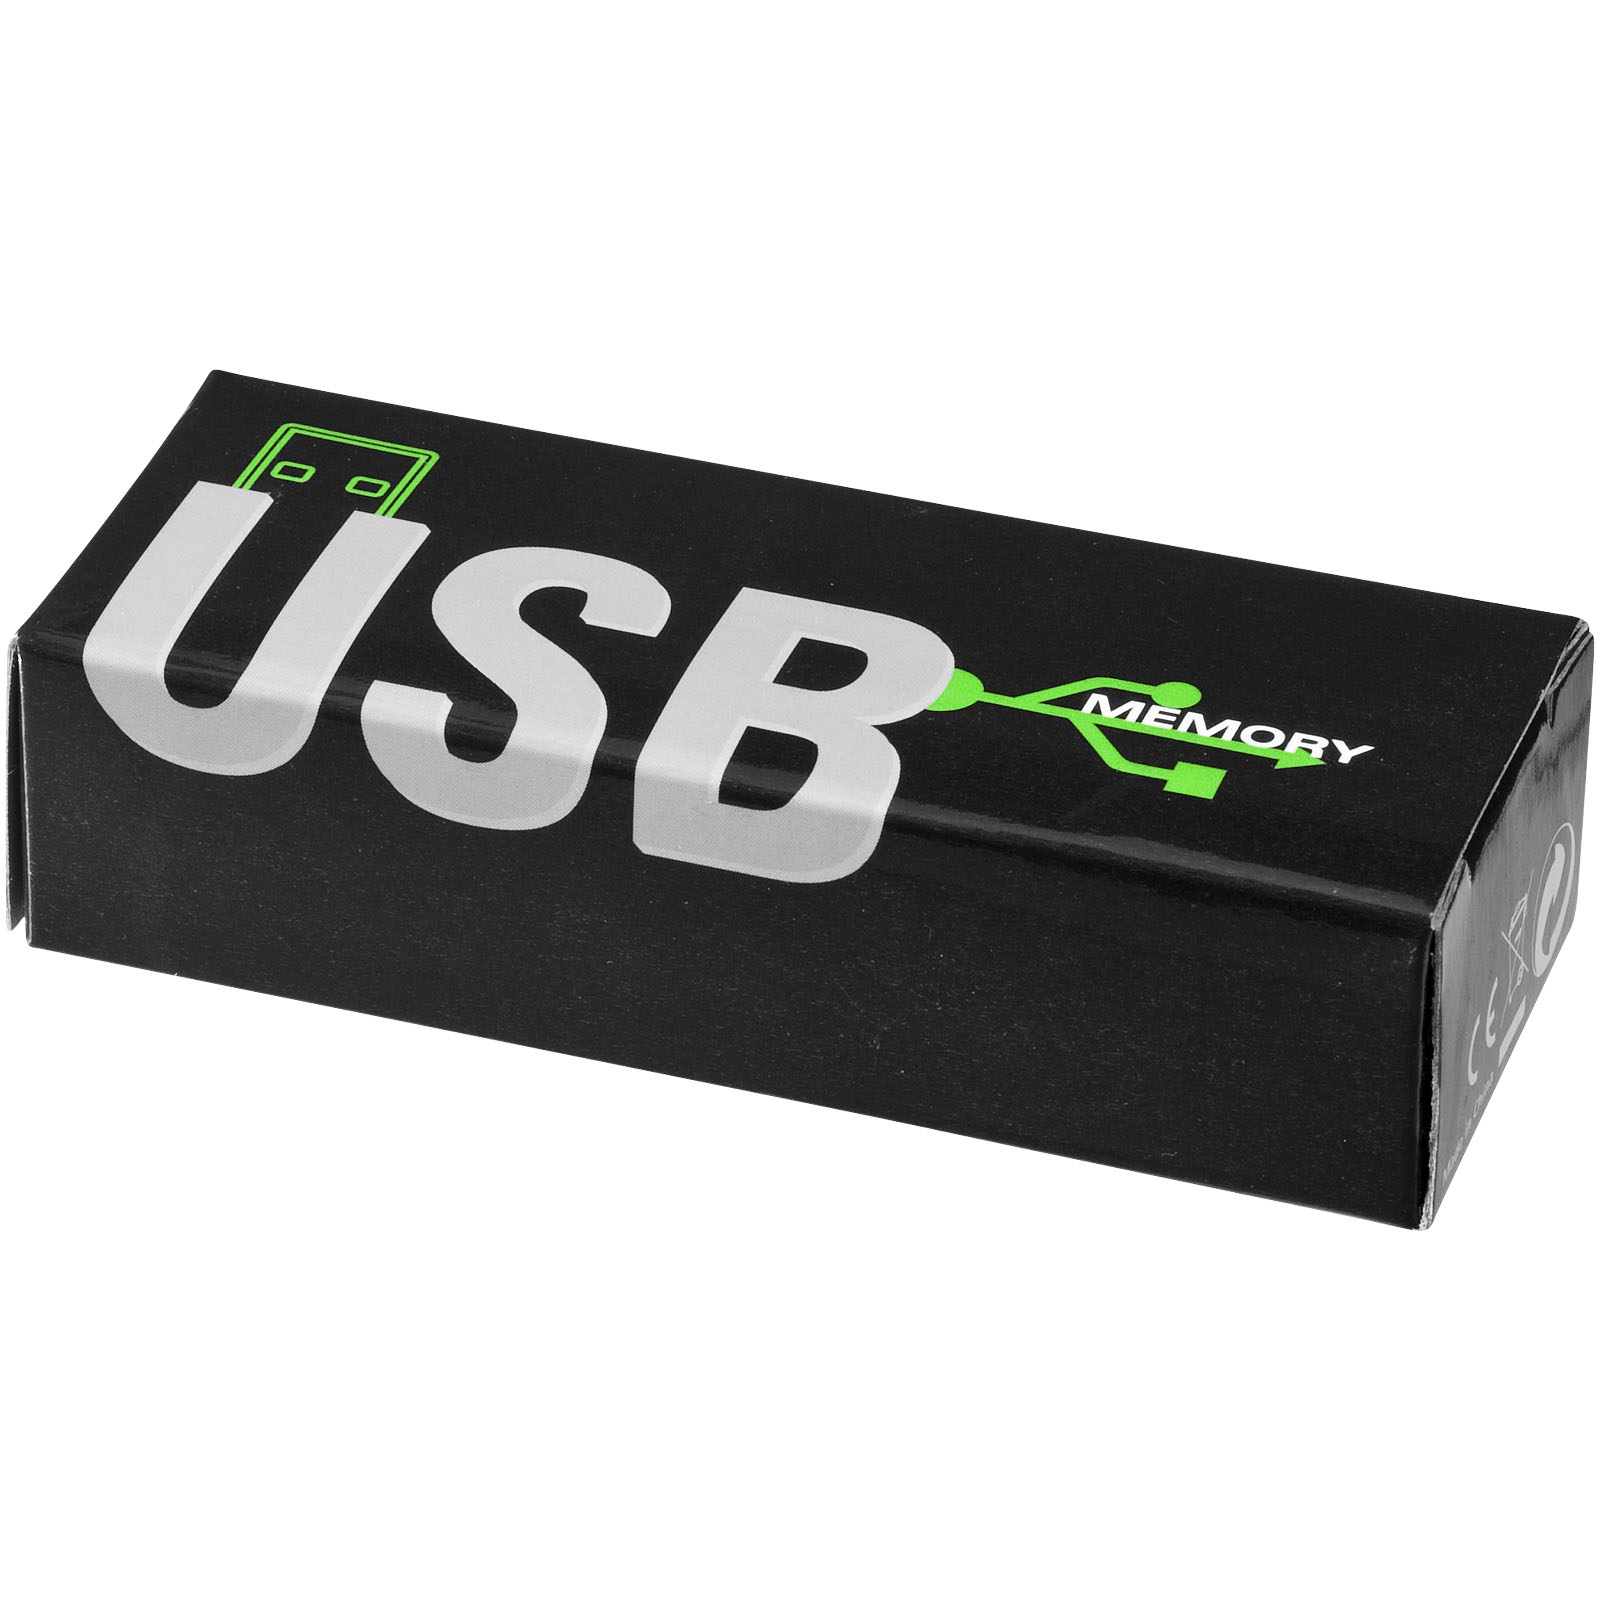 Advertising USB Flash Drives - Rotate-basic 2GB USB flash drive - 1